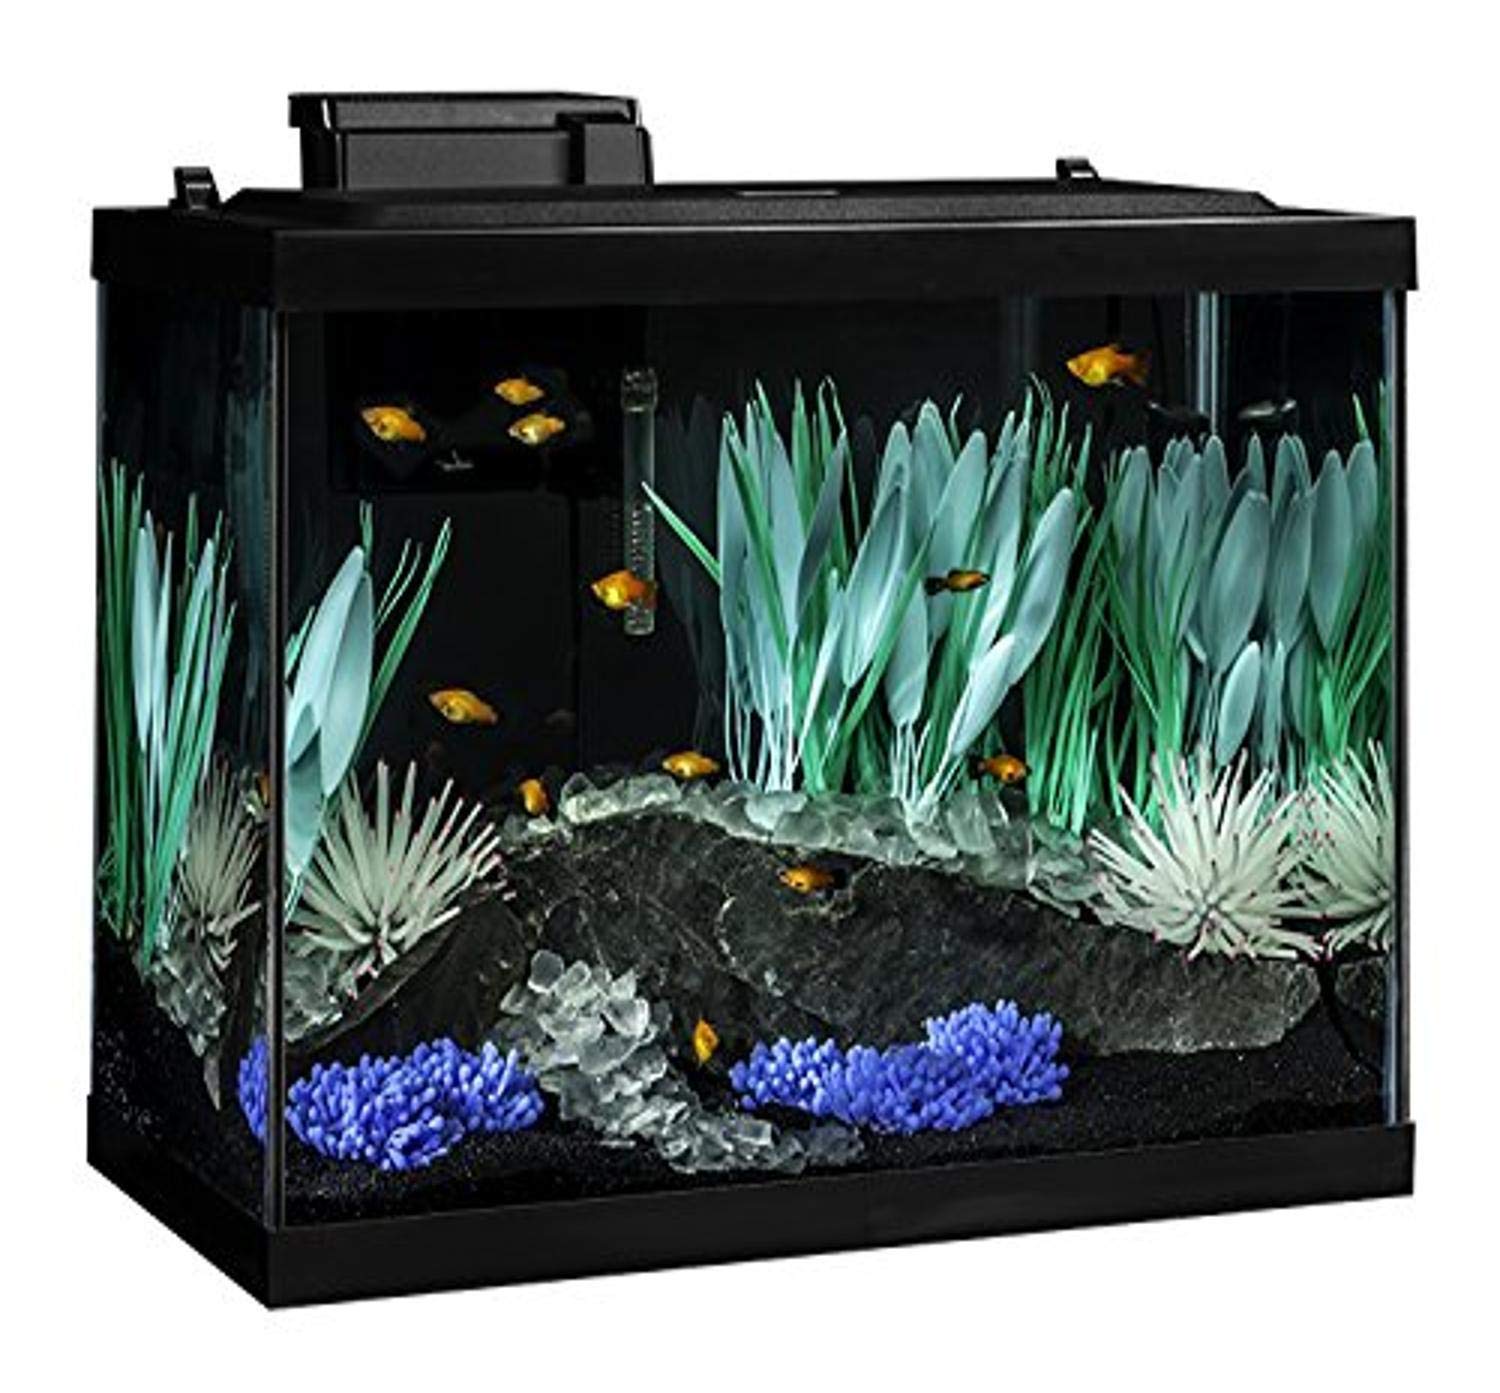 Tetra Aquarium 20 Gallon Fish Tank Kit: LED Lighting and Decor Included.